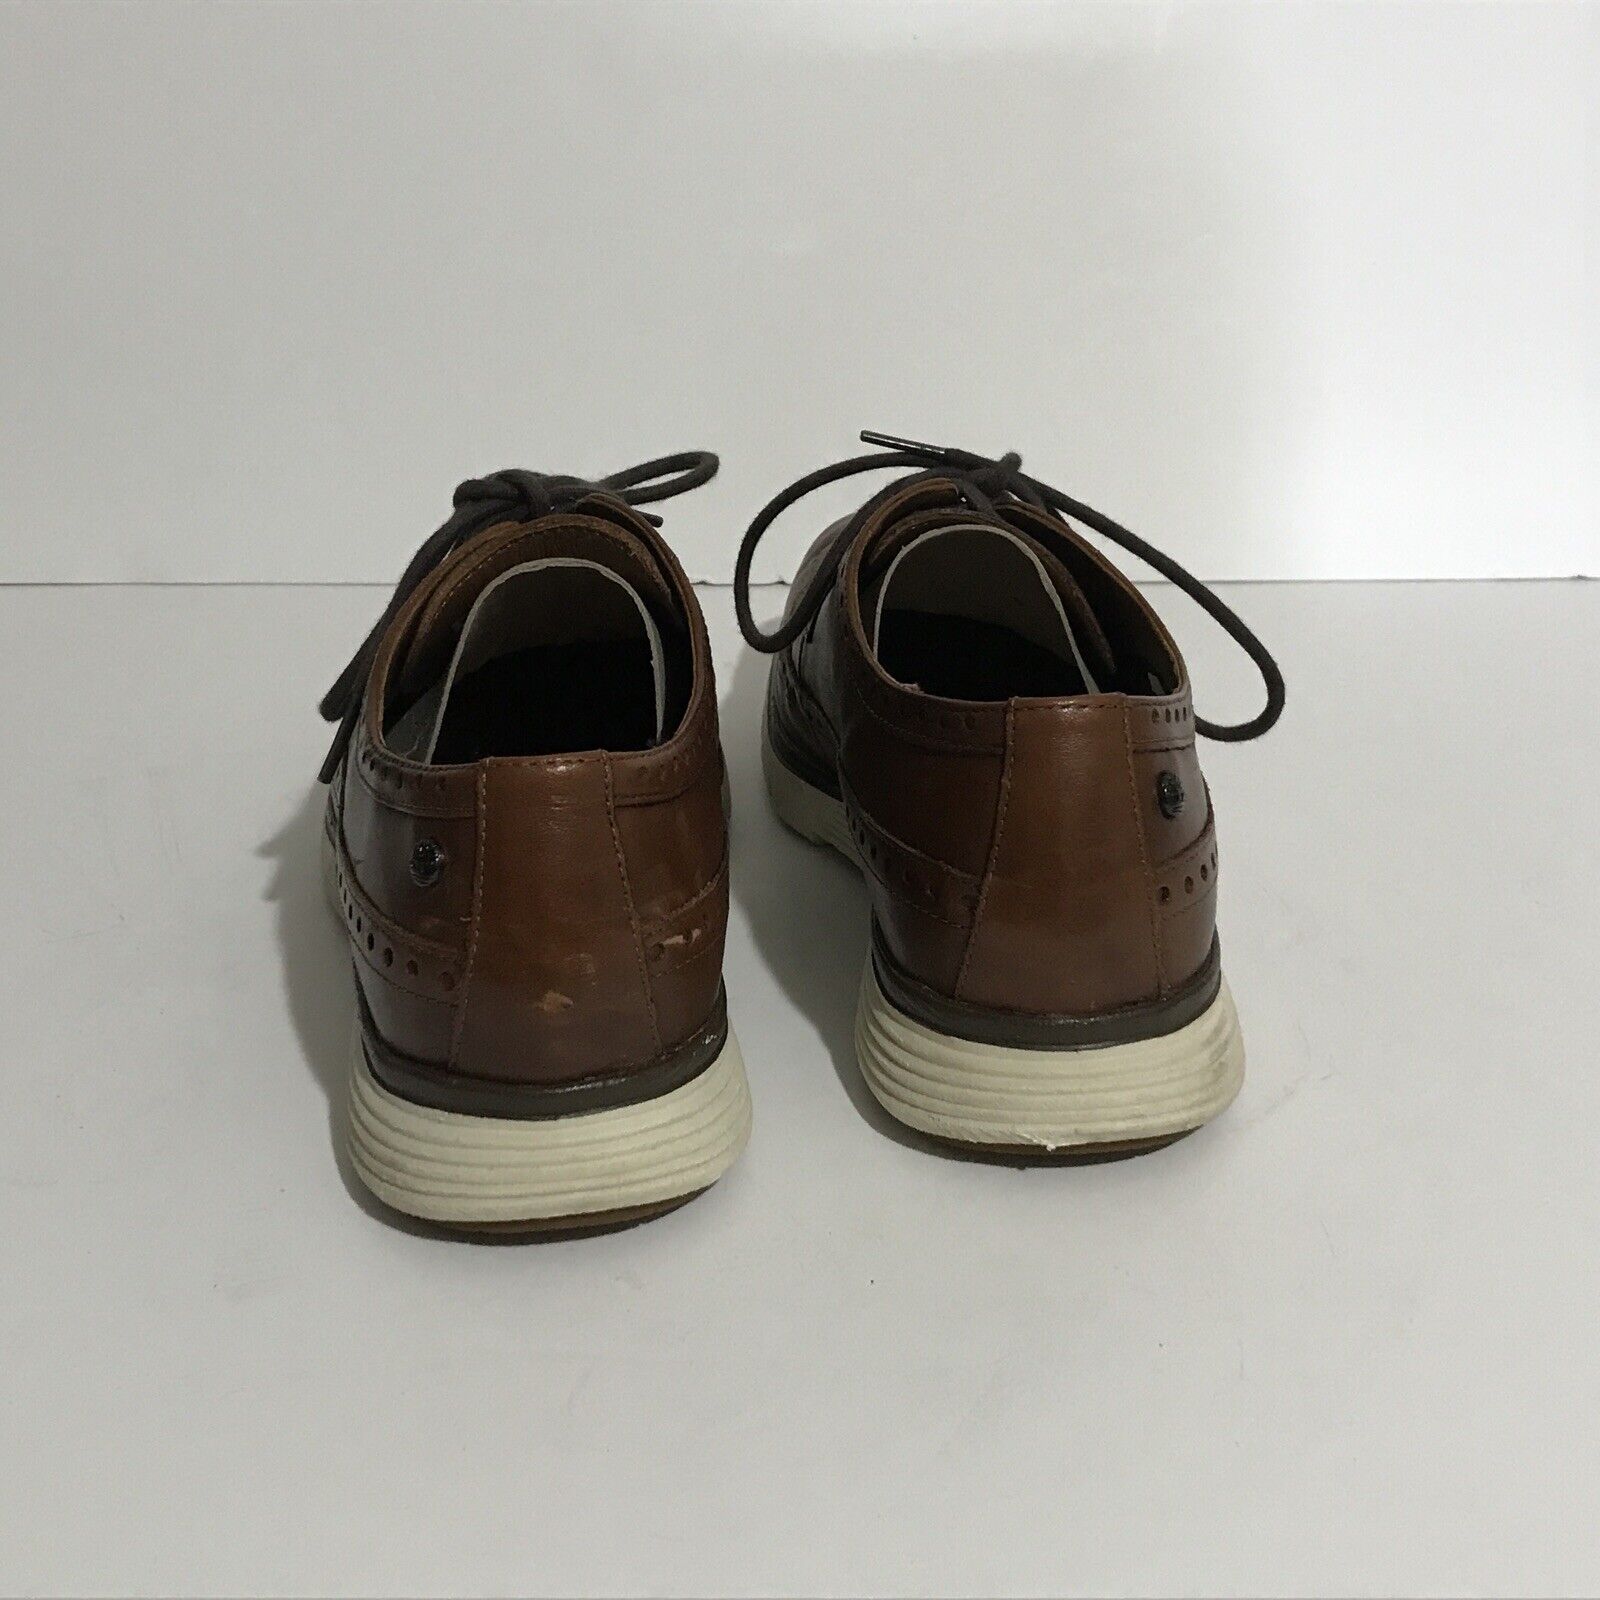 Kilometers Overleving Koning Lear TIMBERLAND Sensorflex Shoes 7.5 Mens Brown A1obt | eBay